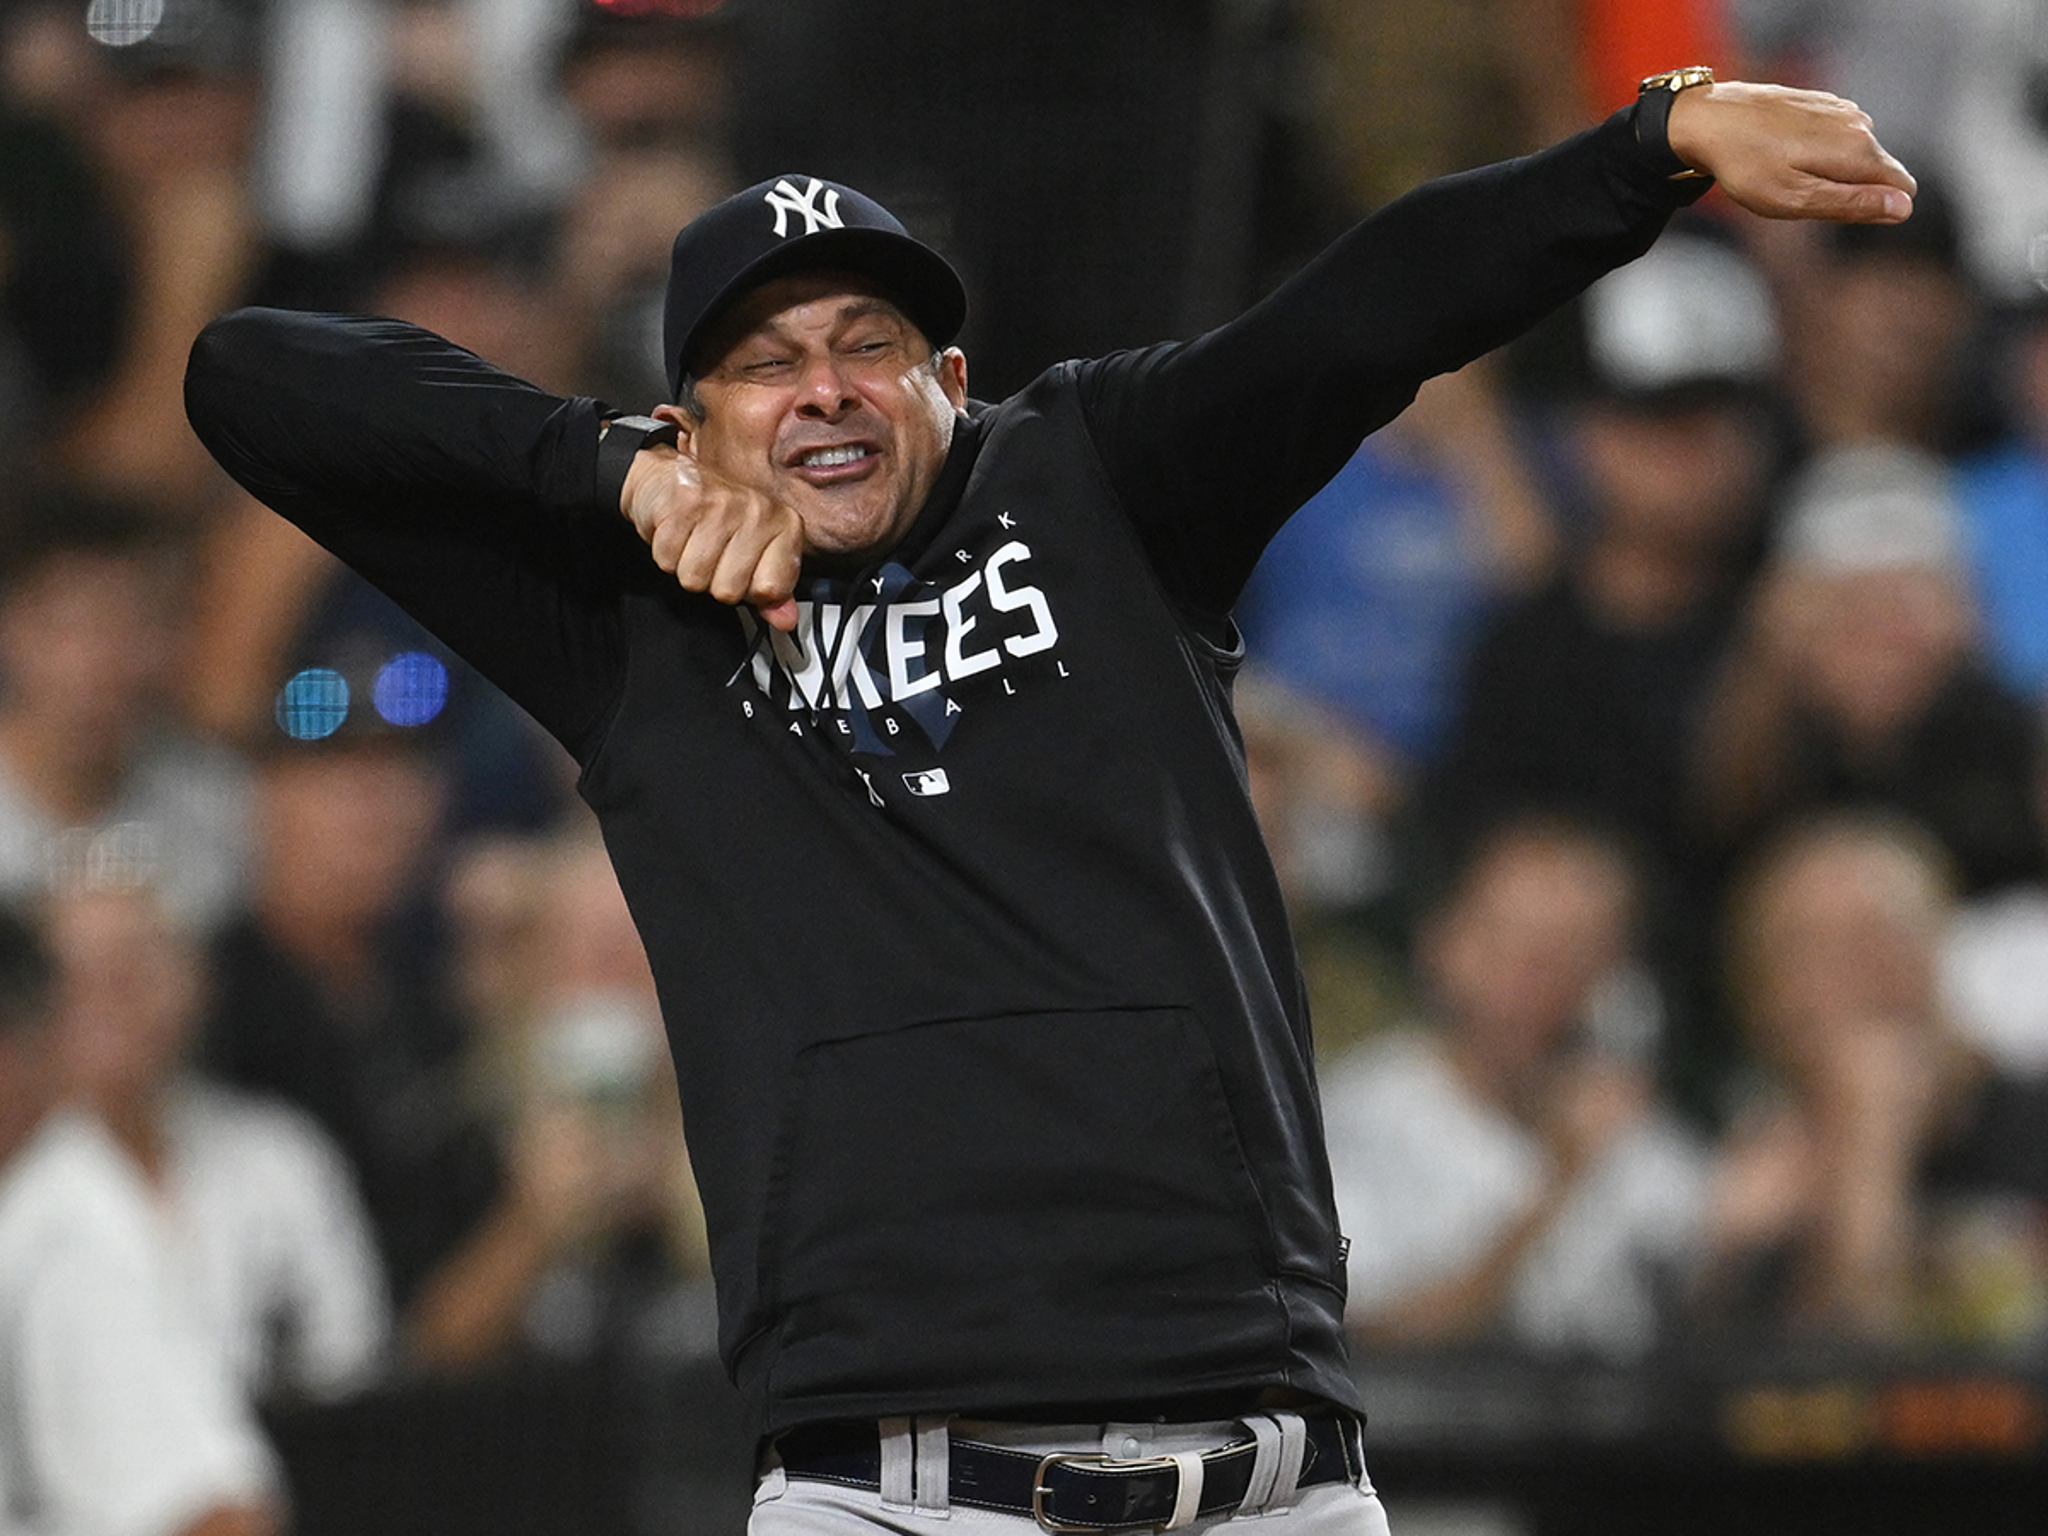 Yankees Manager Aaron Boone Mocks Ump In Wild Meltdown Over Strike